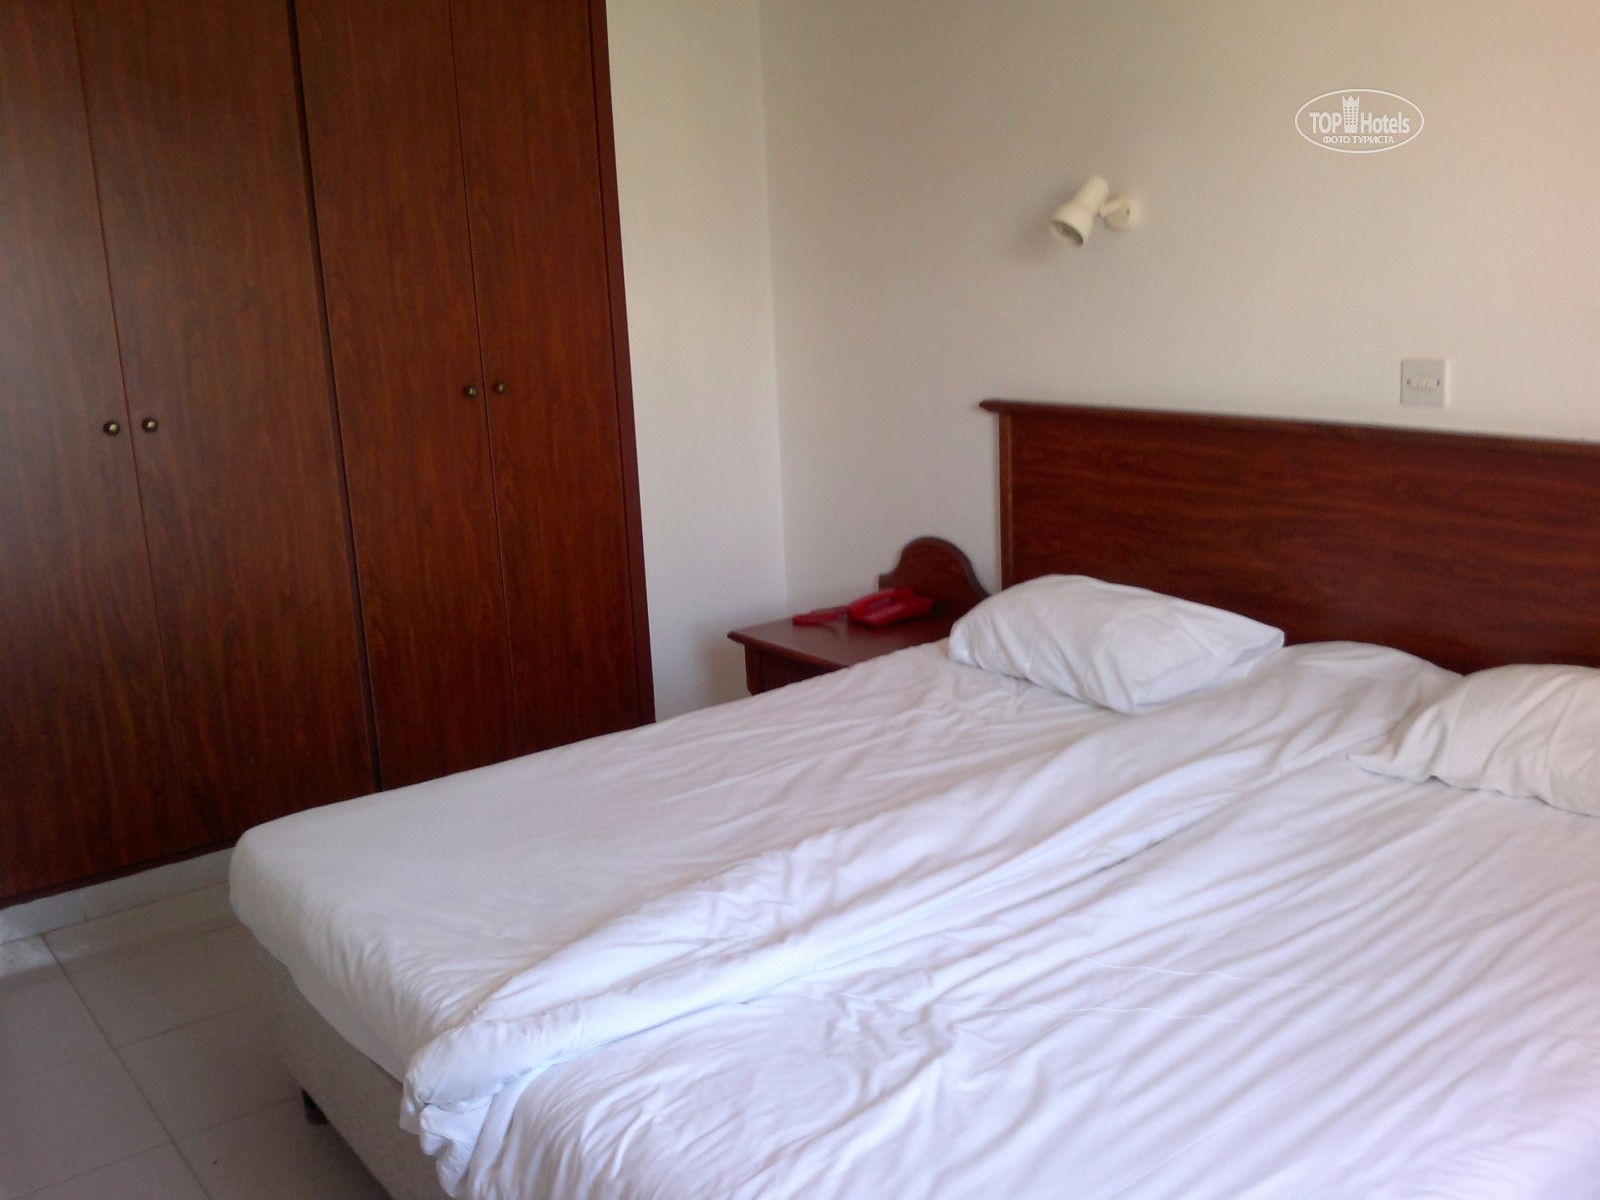 Hotel rest Tropical Dreams Hotel Apartments Protaras Cyprus